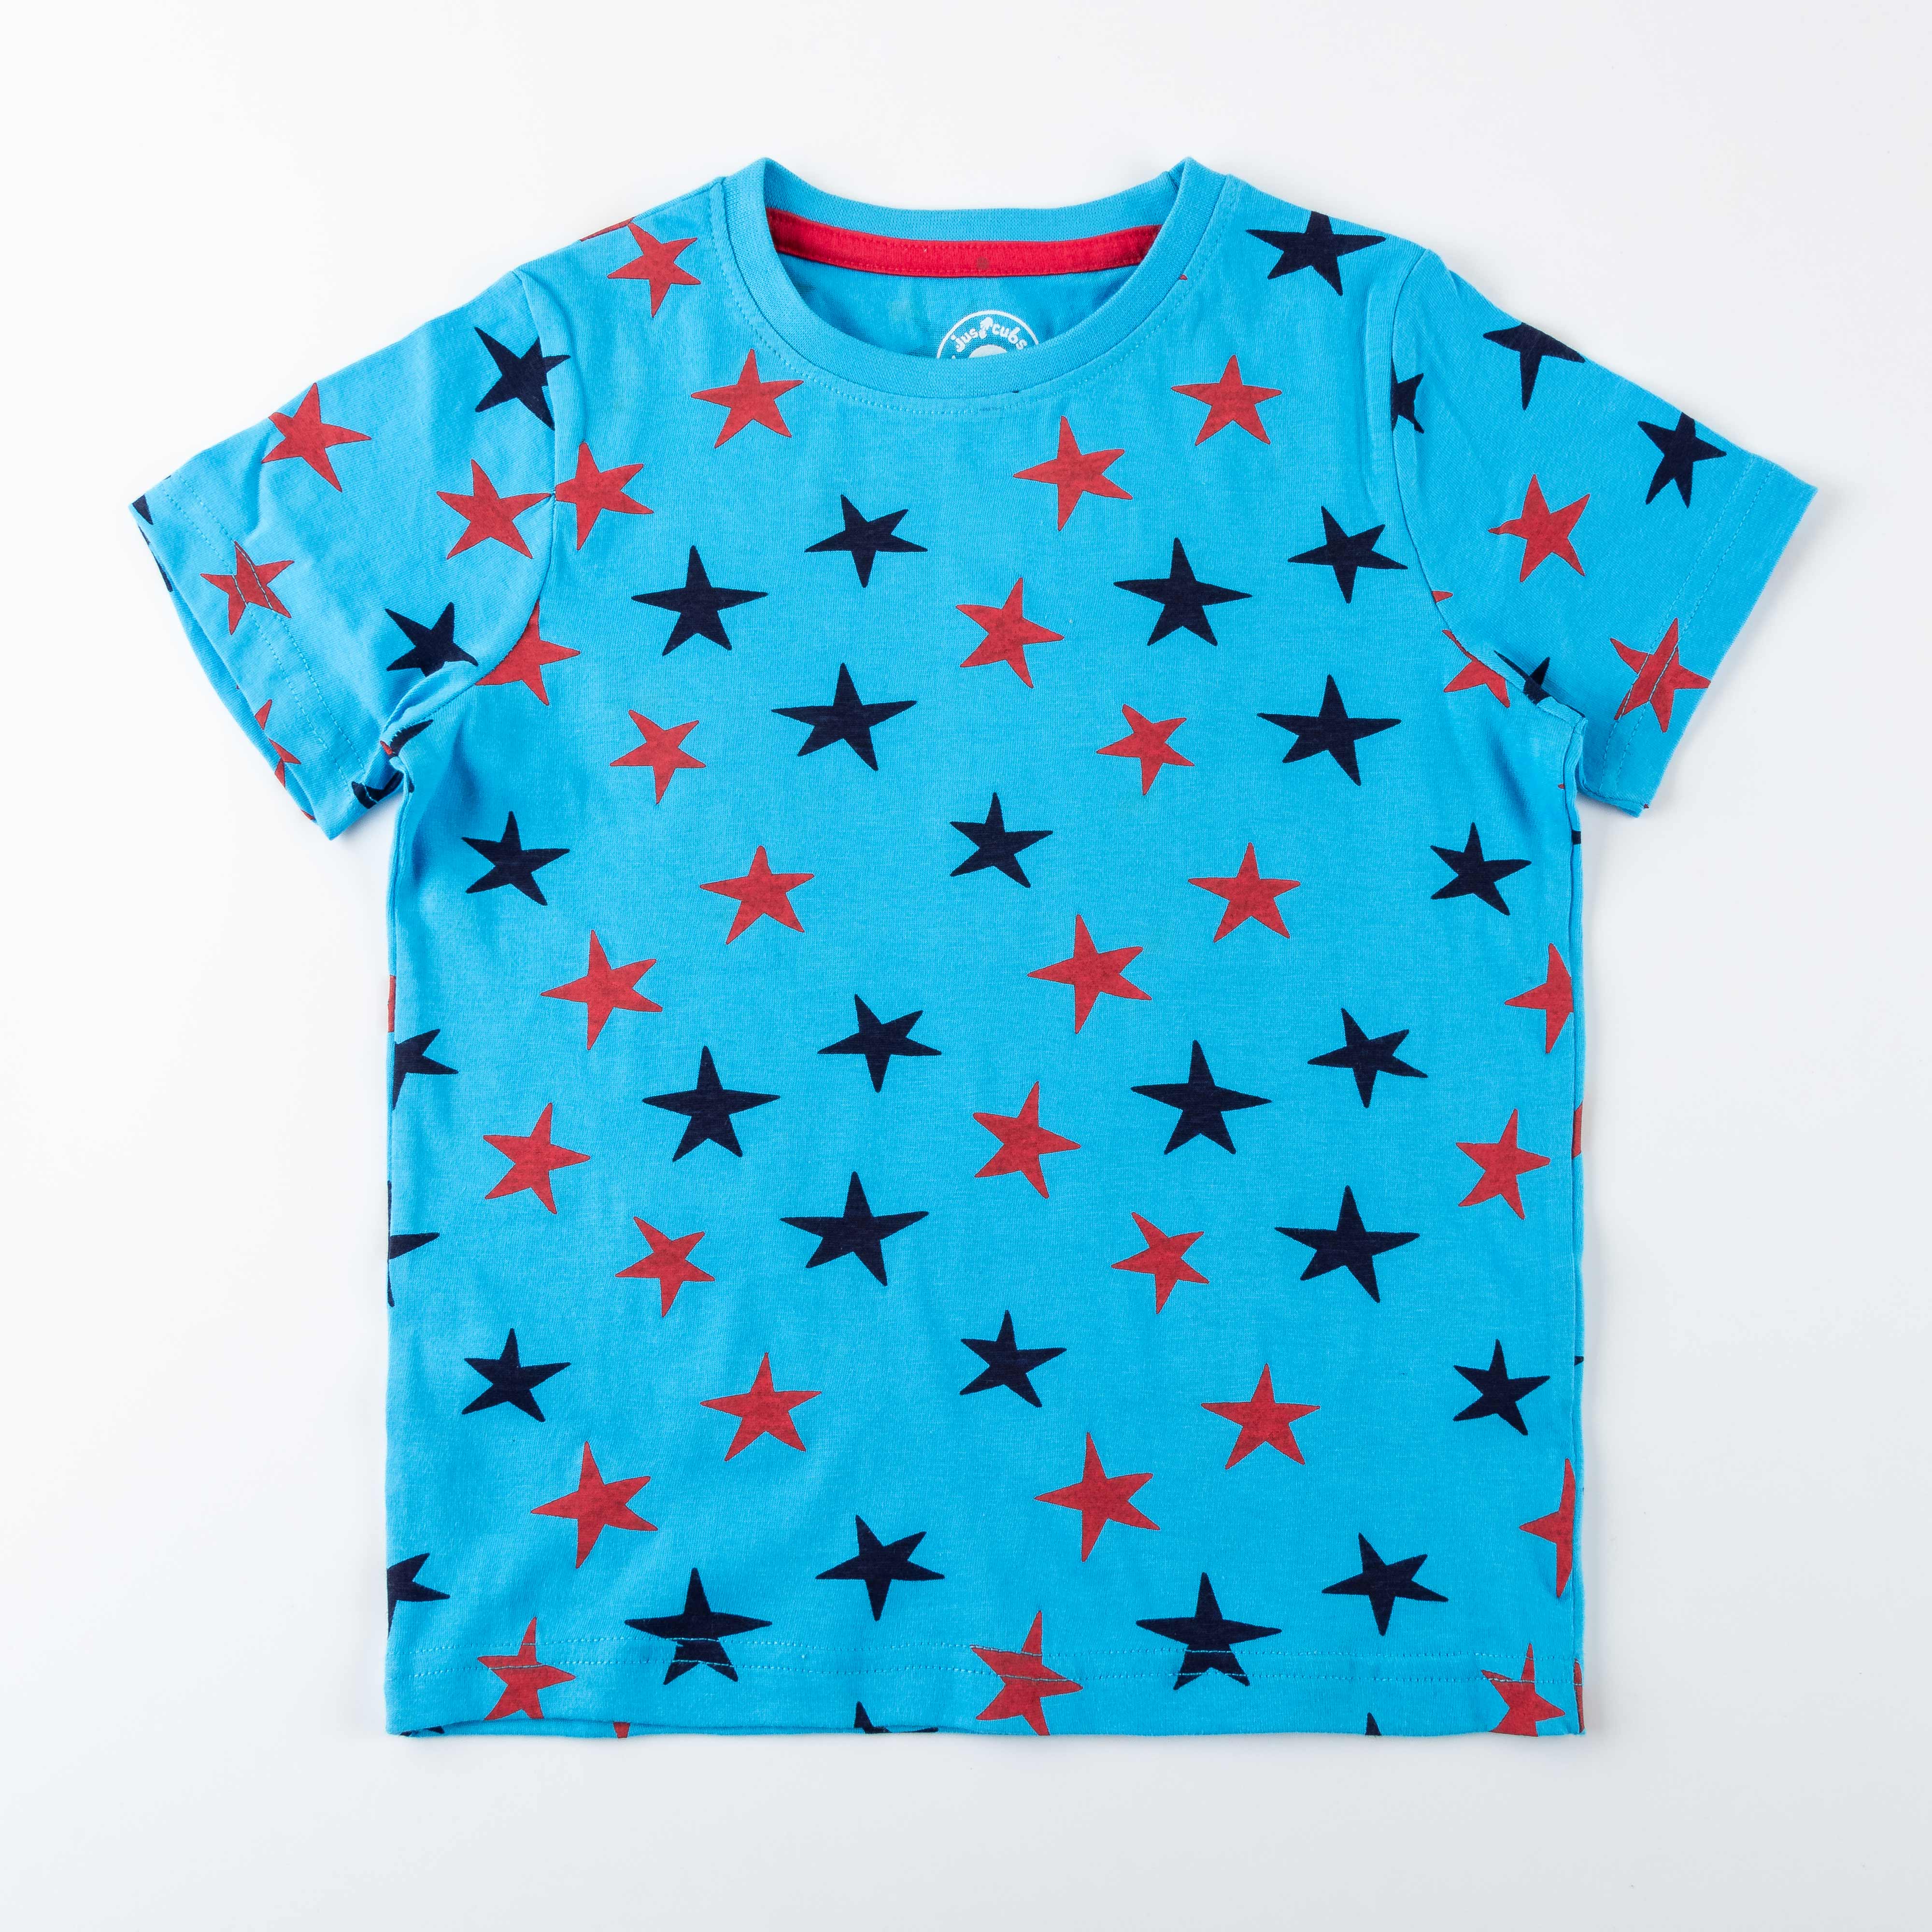 Boys Pyjama & Star Printed Top Sets